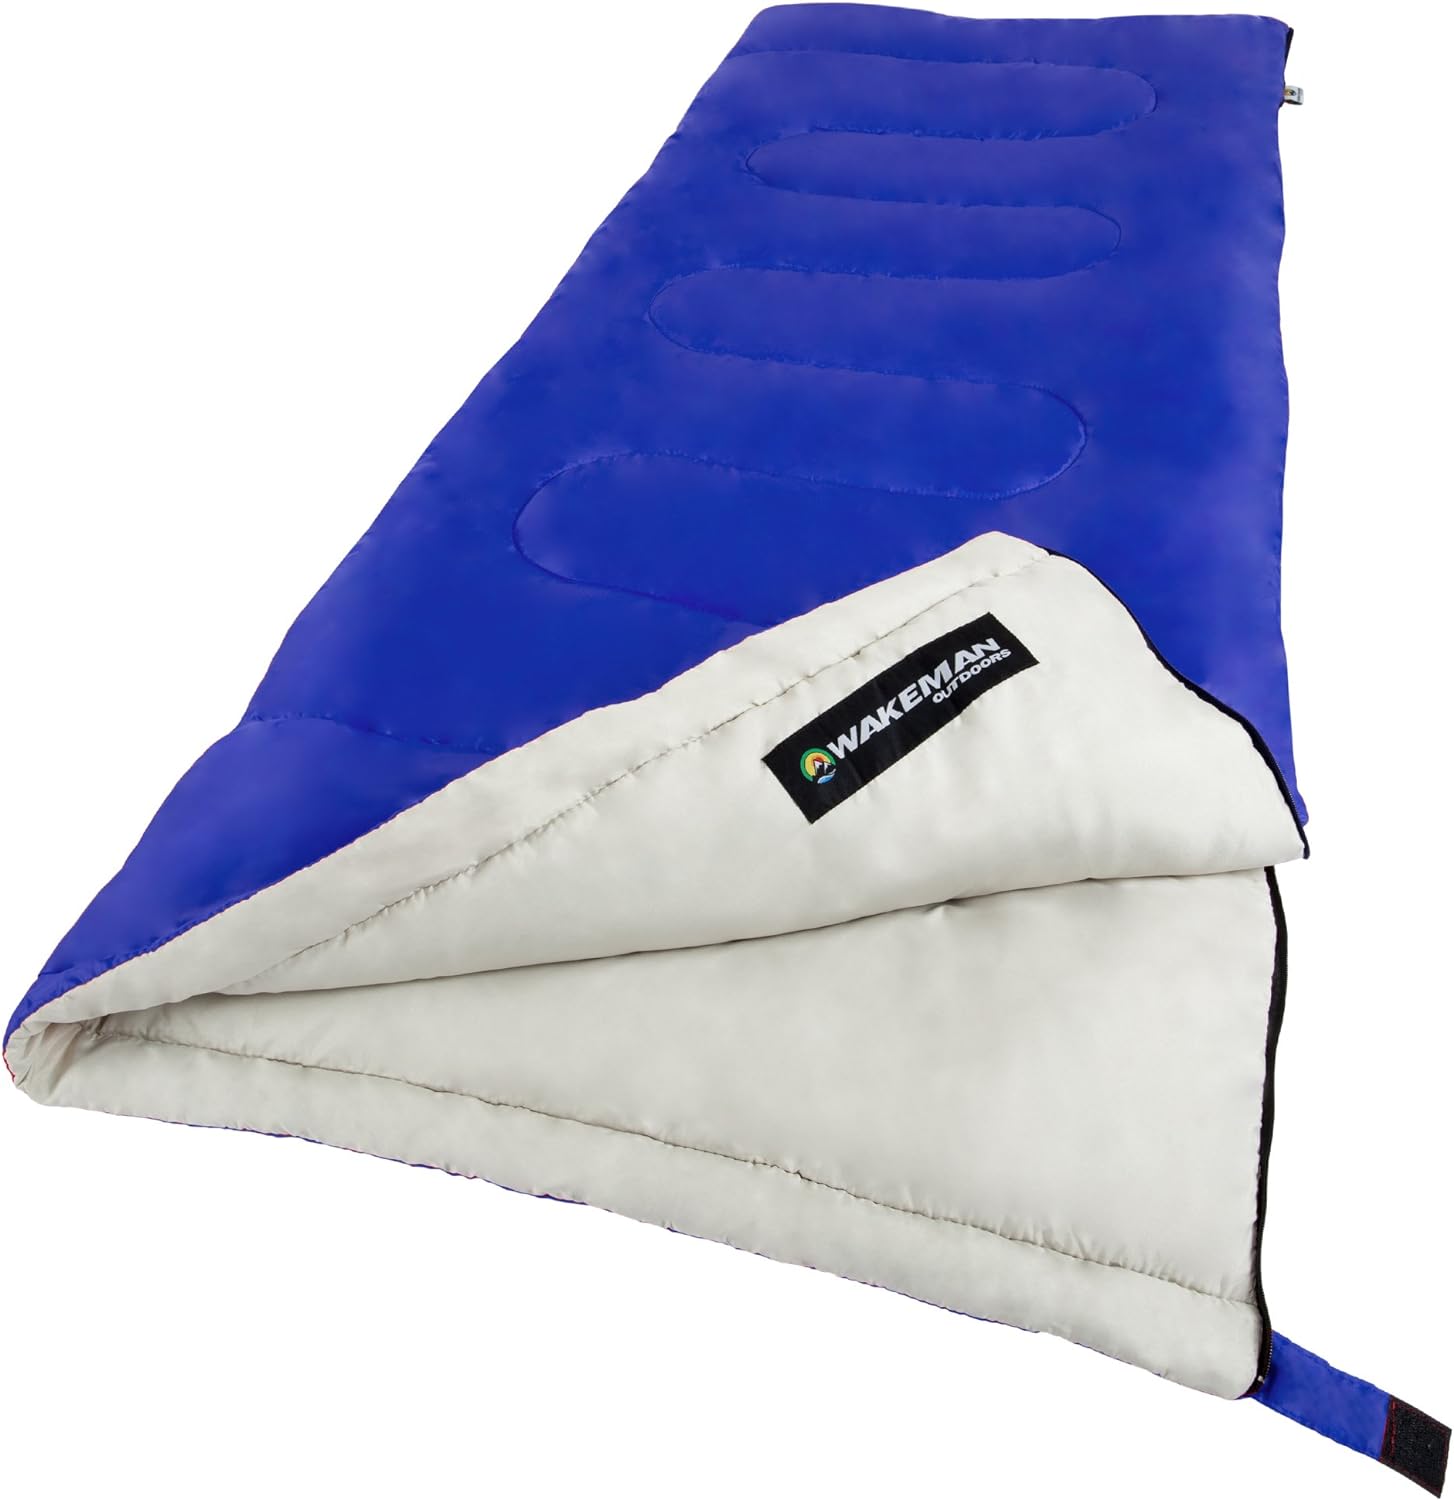 Wakeman Outdoors Sleeping Bag